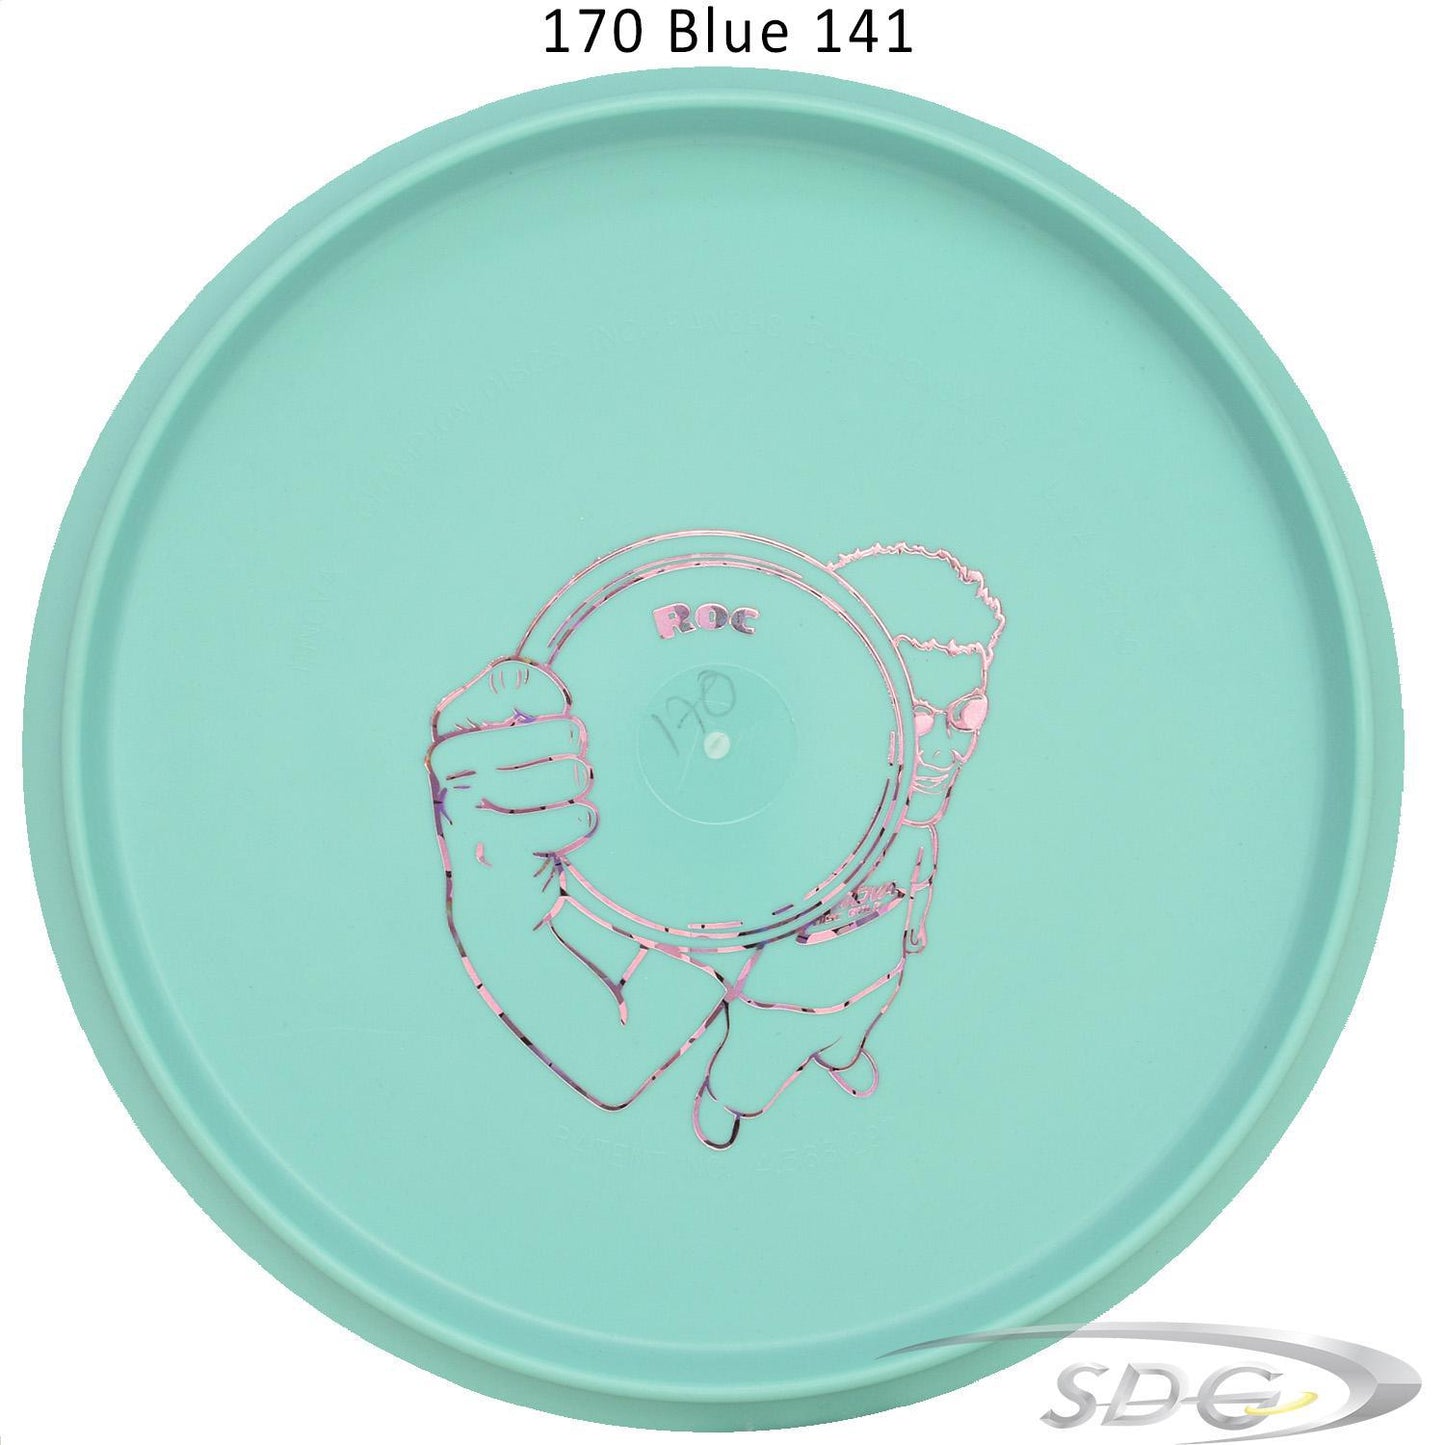 innova-dx-roc-bottom-stamp-disc-golf-mid-range 170 Blue 141 